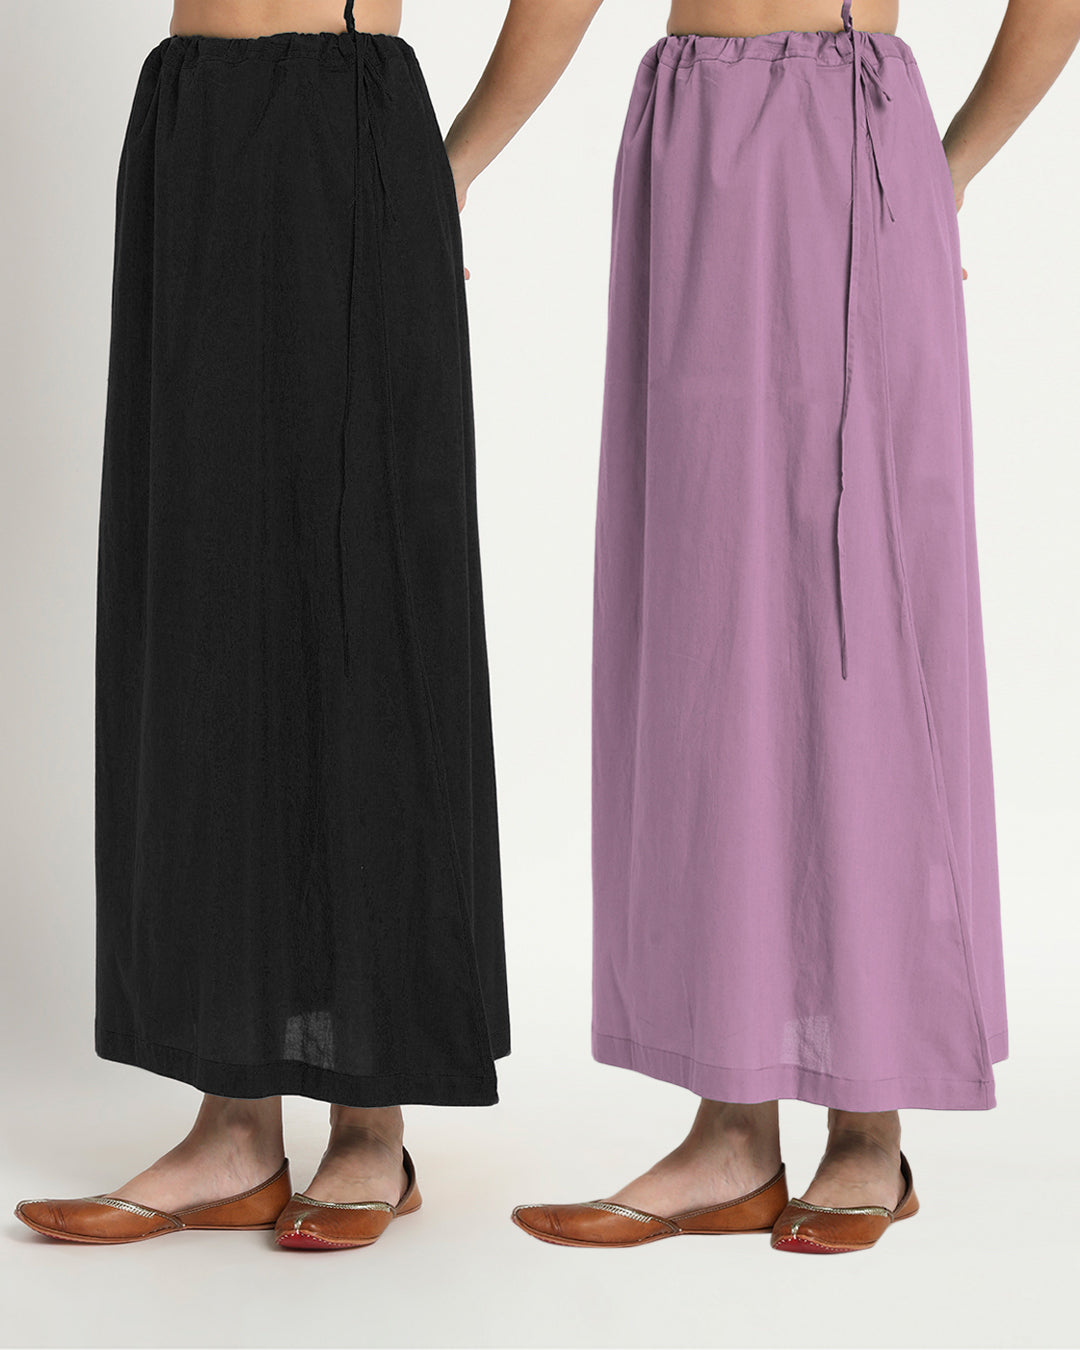 Combo: Black & Iris Pink Peekaboo Petticoat- Set of 2